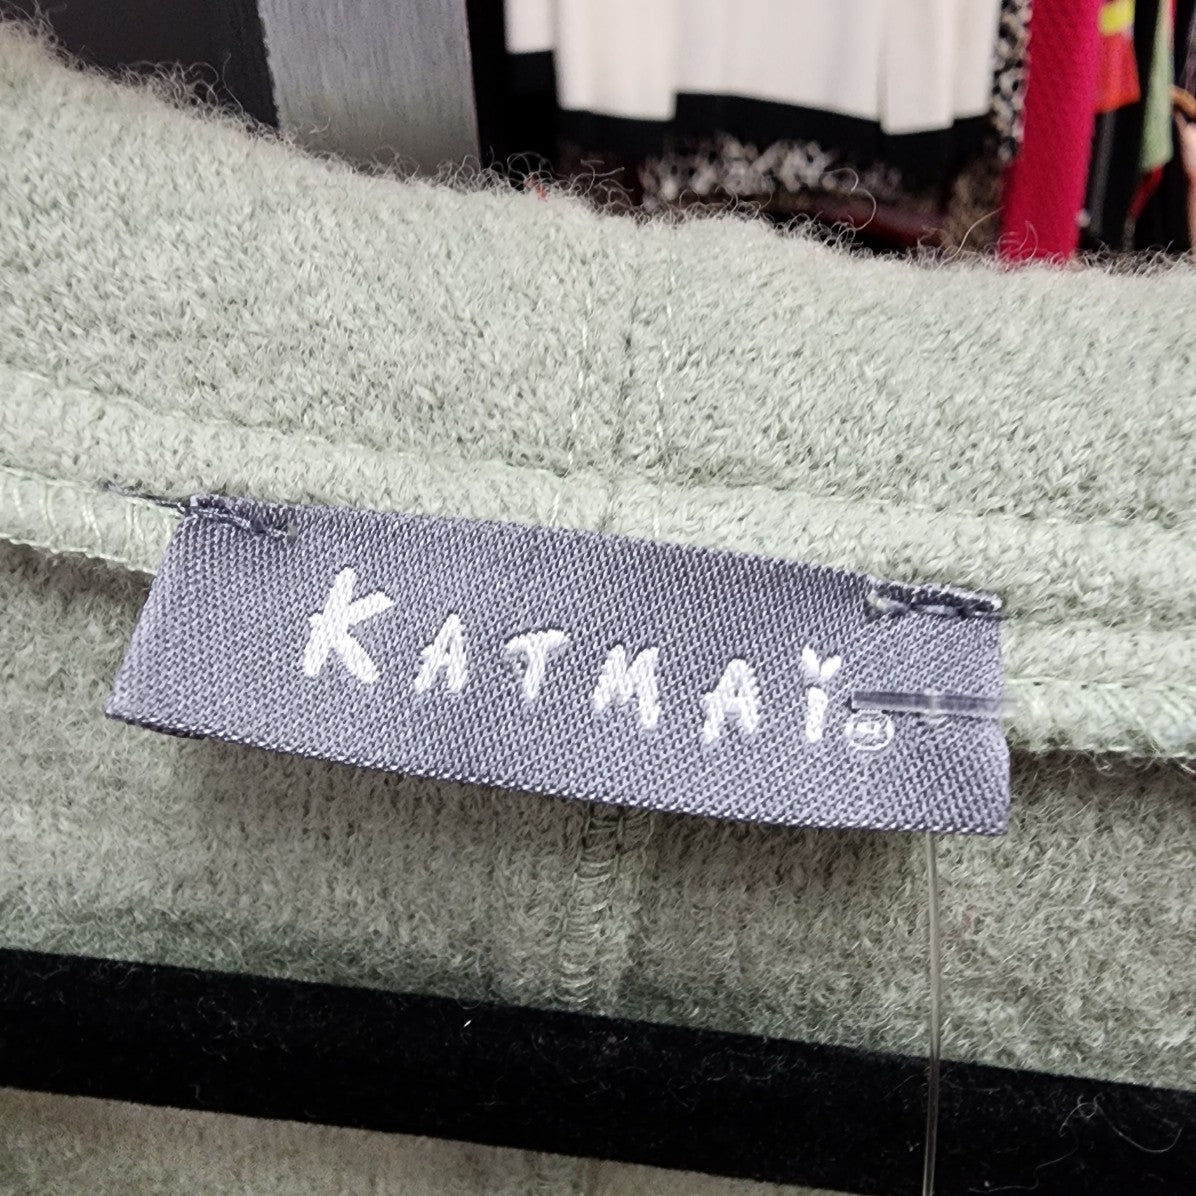 Katmai Green Flower One Detail Jacket Blazer Size S/M